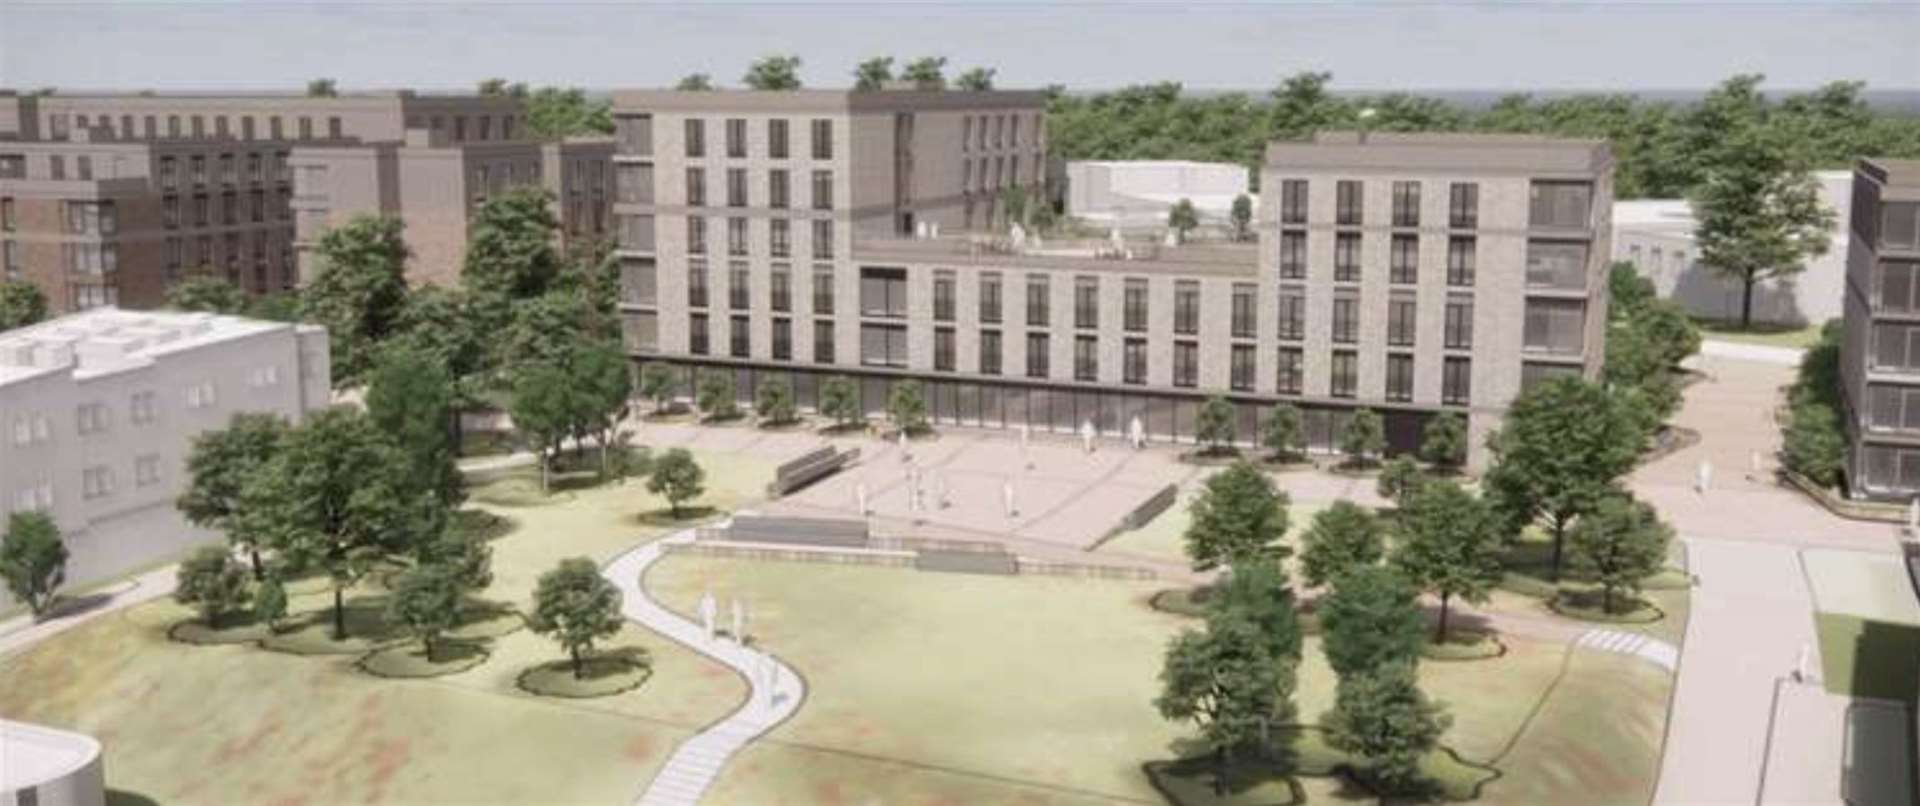 The huge student flats plan for UKC at Giles Lane, Canterbury. Credit: UKC/St Edmund’s School